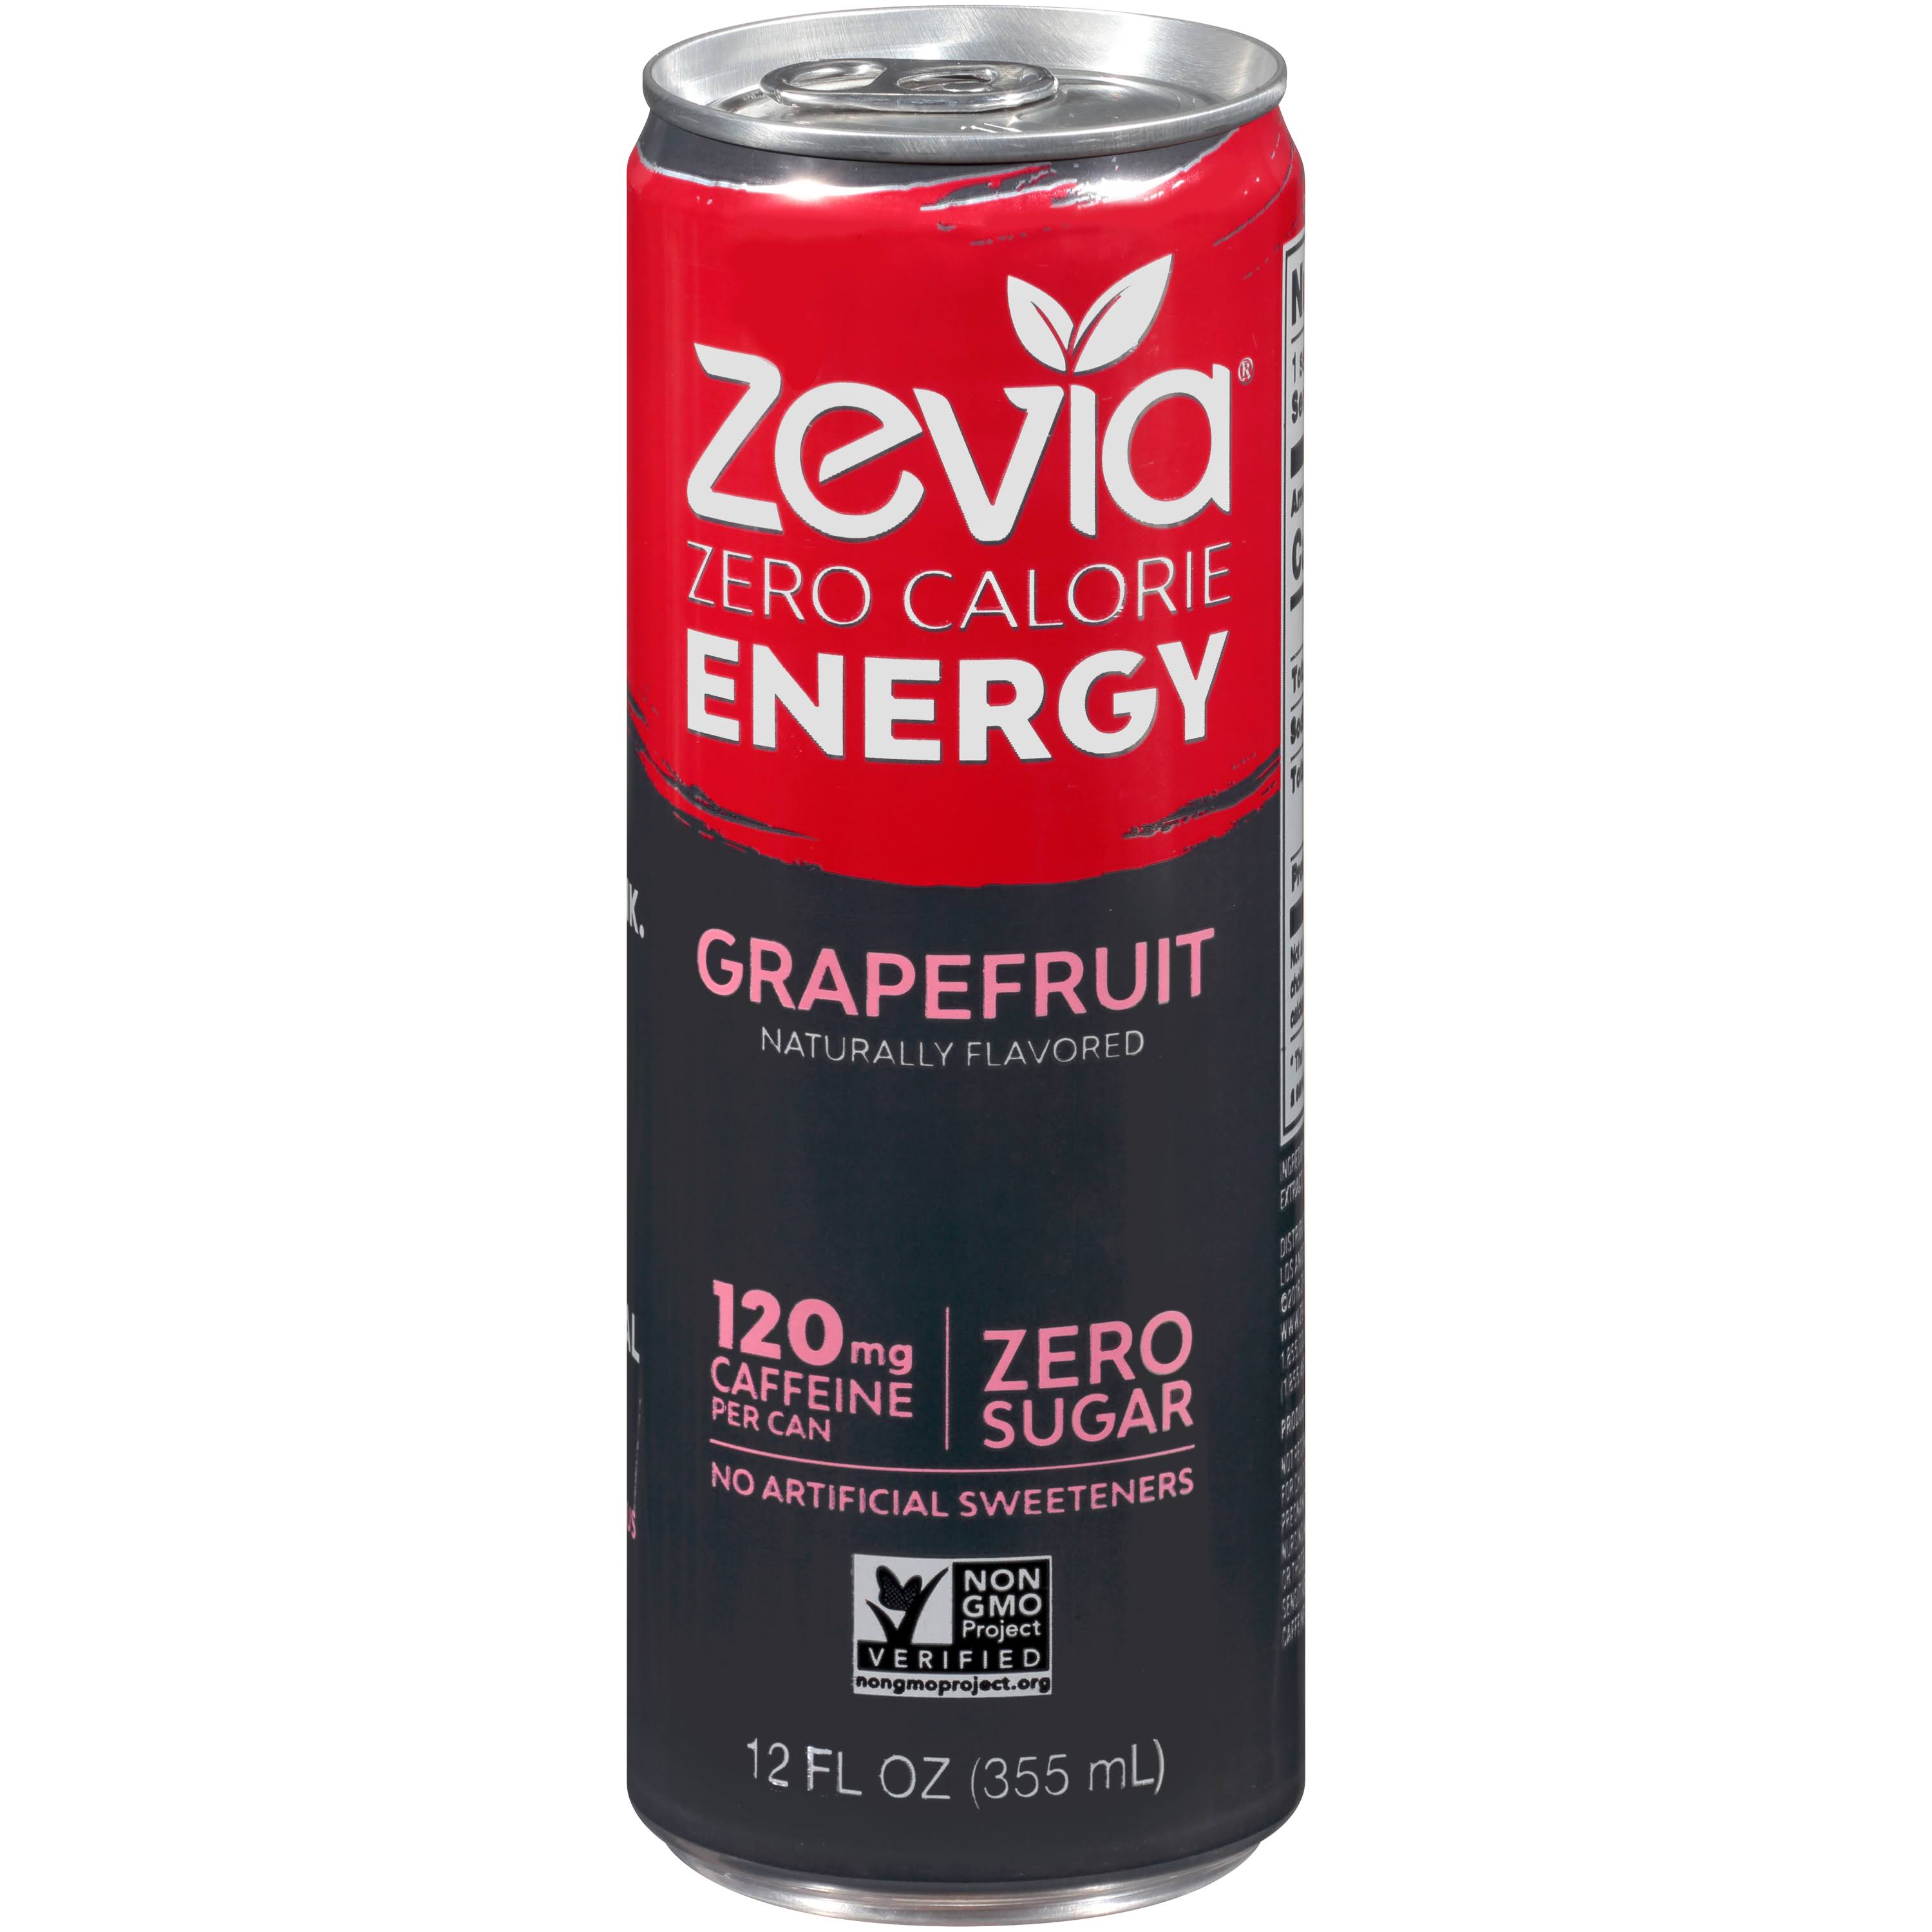 Zevia Zero Calorie Energy Drink, Grapefruit - 12 fl oz can